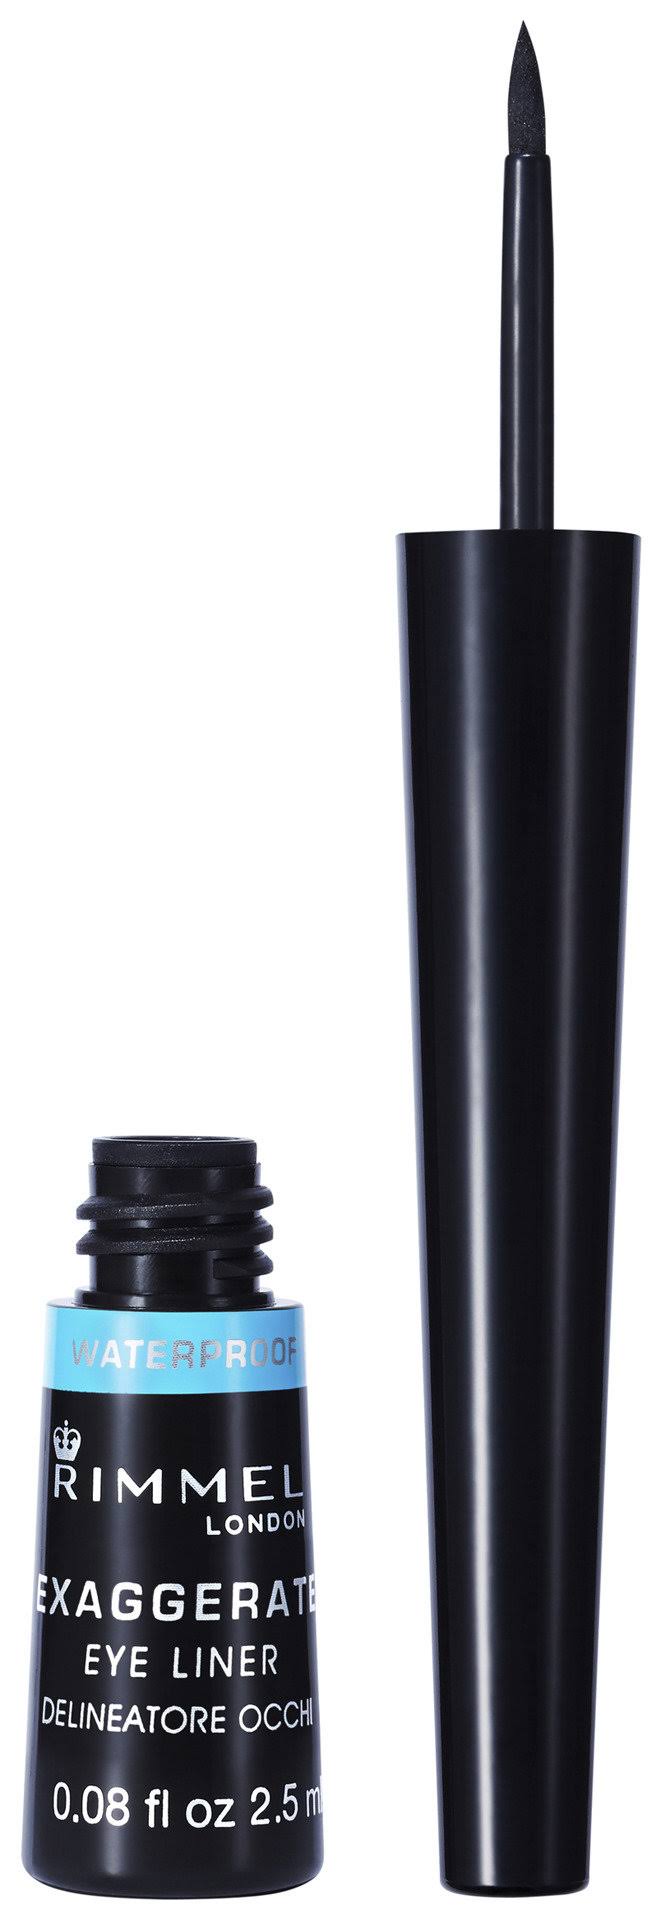 Rimmel London Exaggerate Liquid Eye Liner - 003 Waterproof Black, 2.5ml